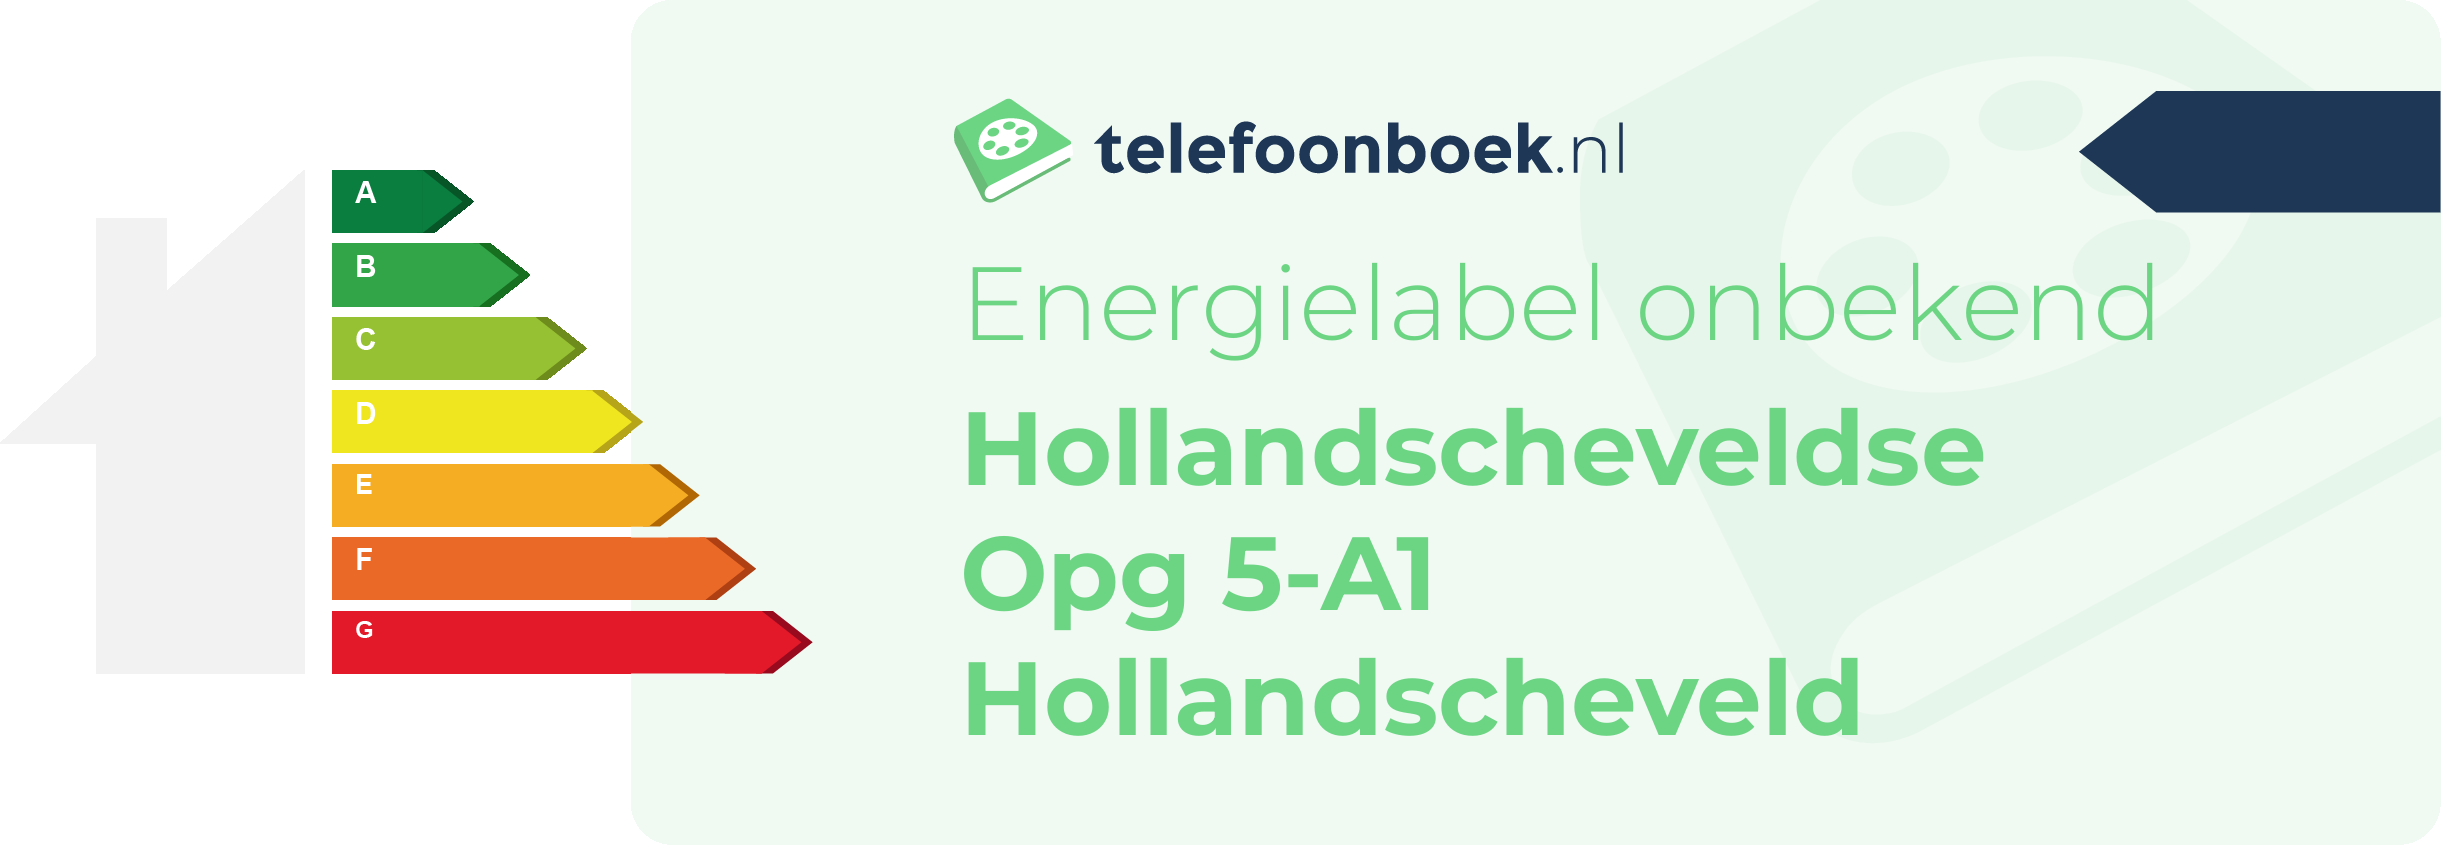 Energielabel Hollandscheveldse Opg 5-A1 Hollandscheveld